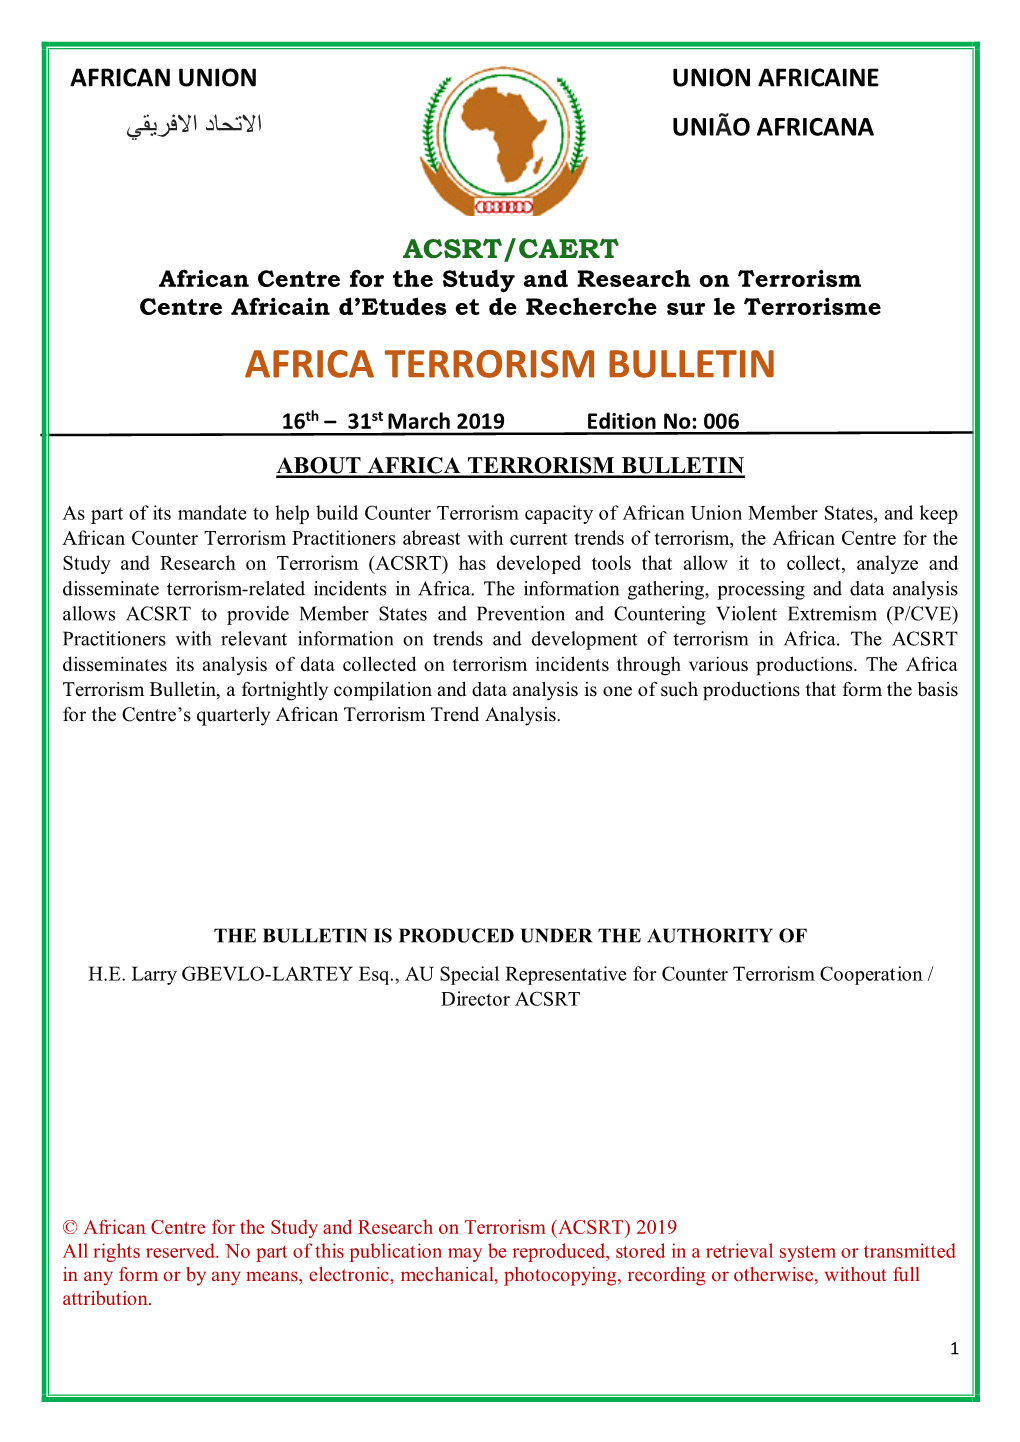 Africa Terrorism Bulletin Issue